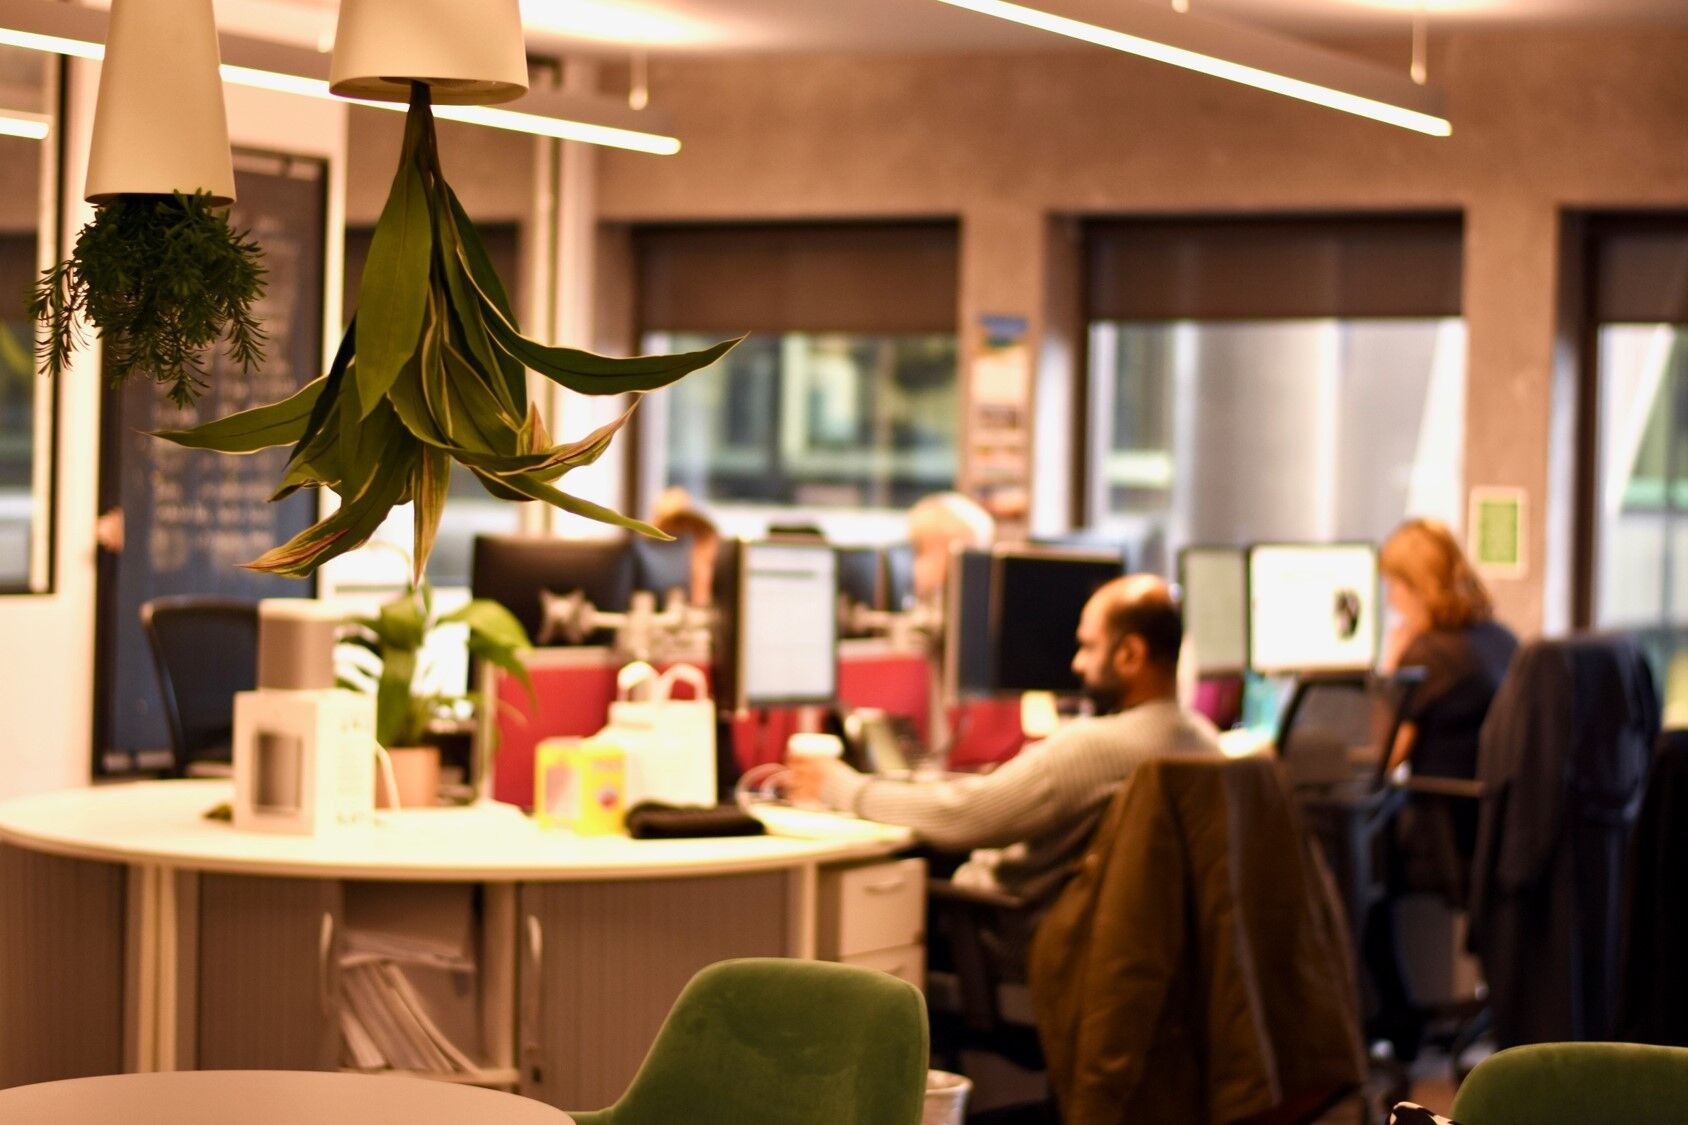 Warm lighting in InterQuest Group's office upside-down plants round desks